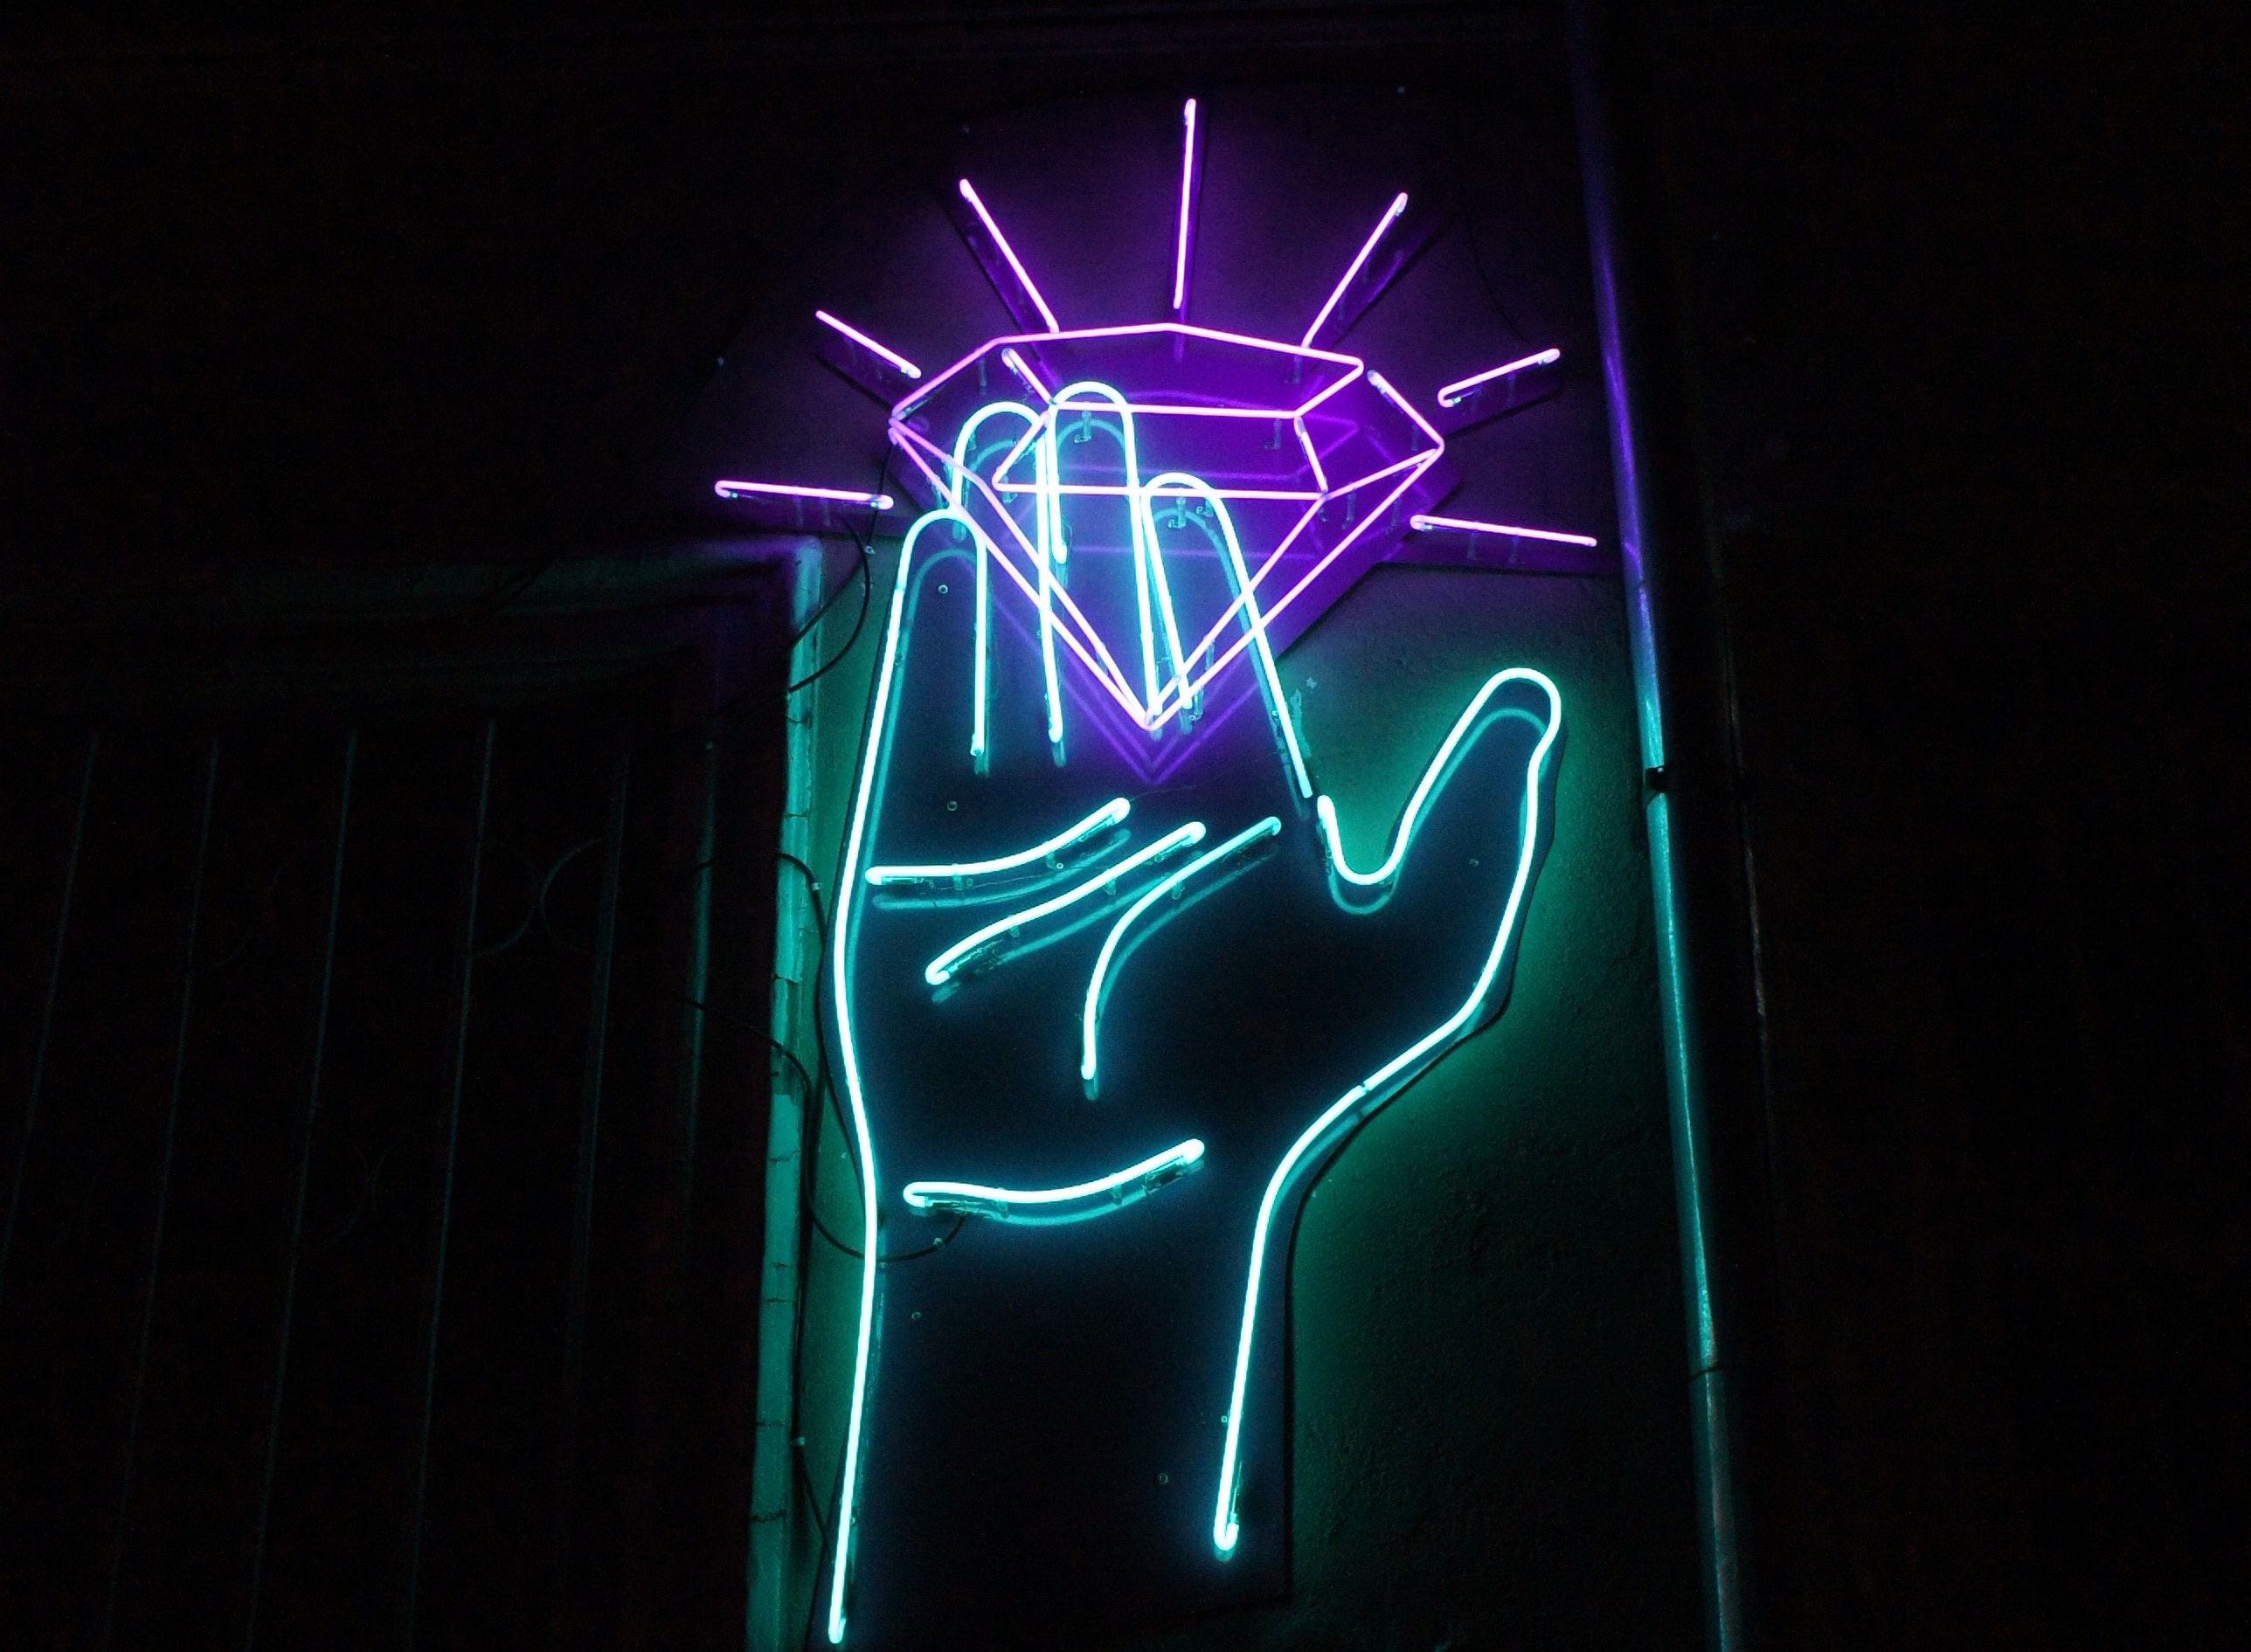 Neon sign of hand and diamond